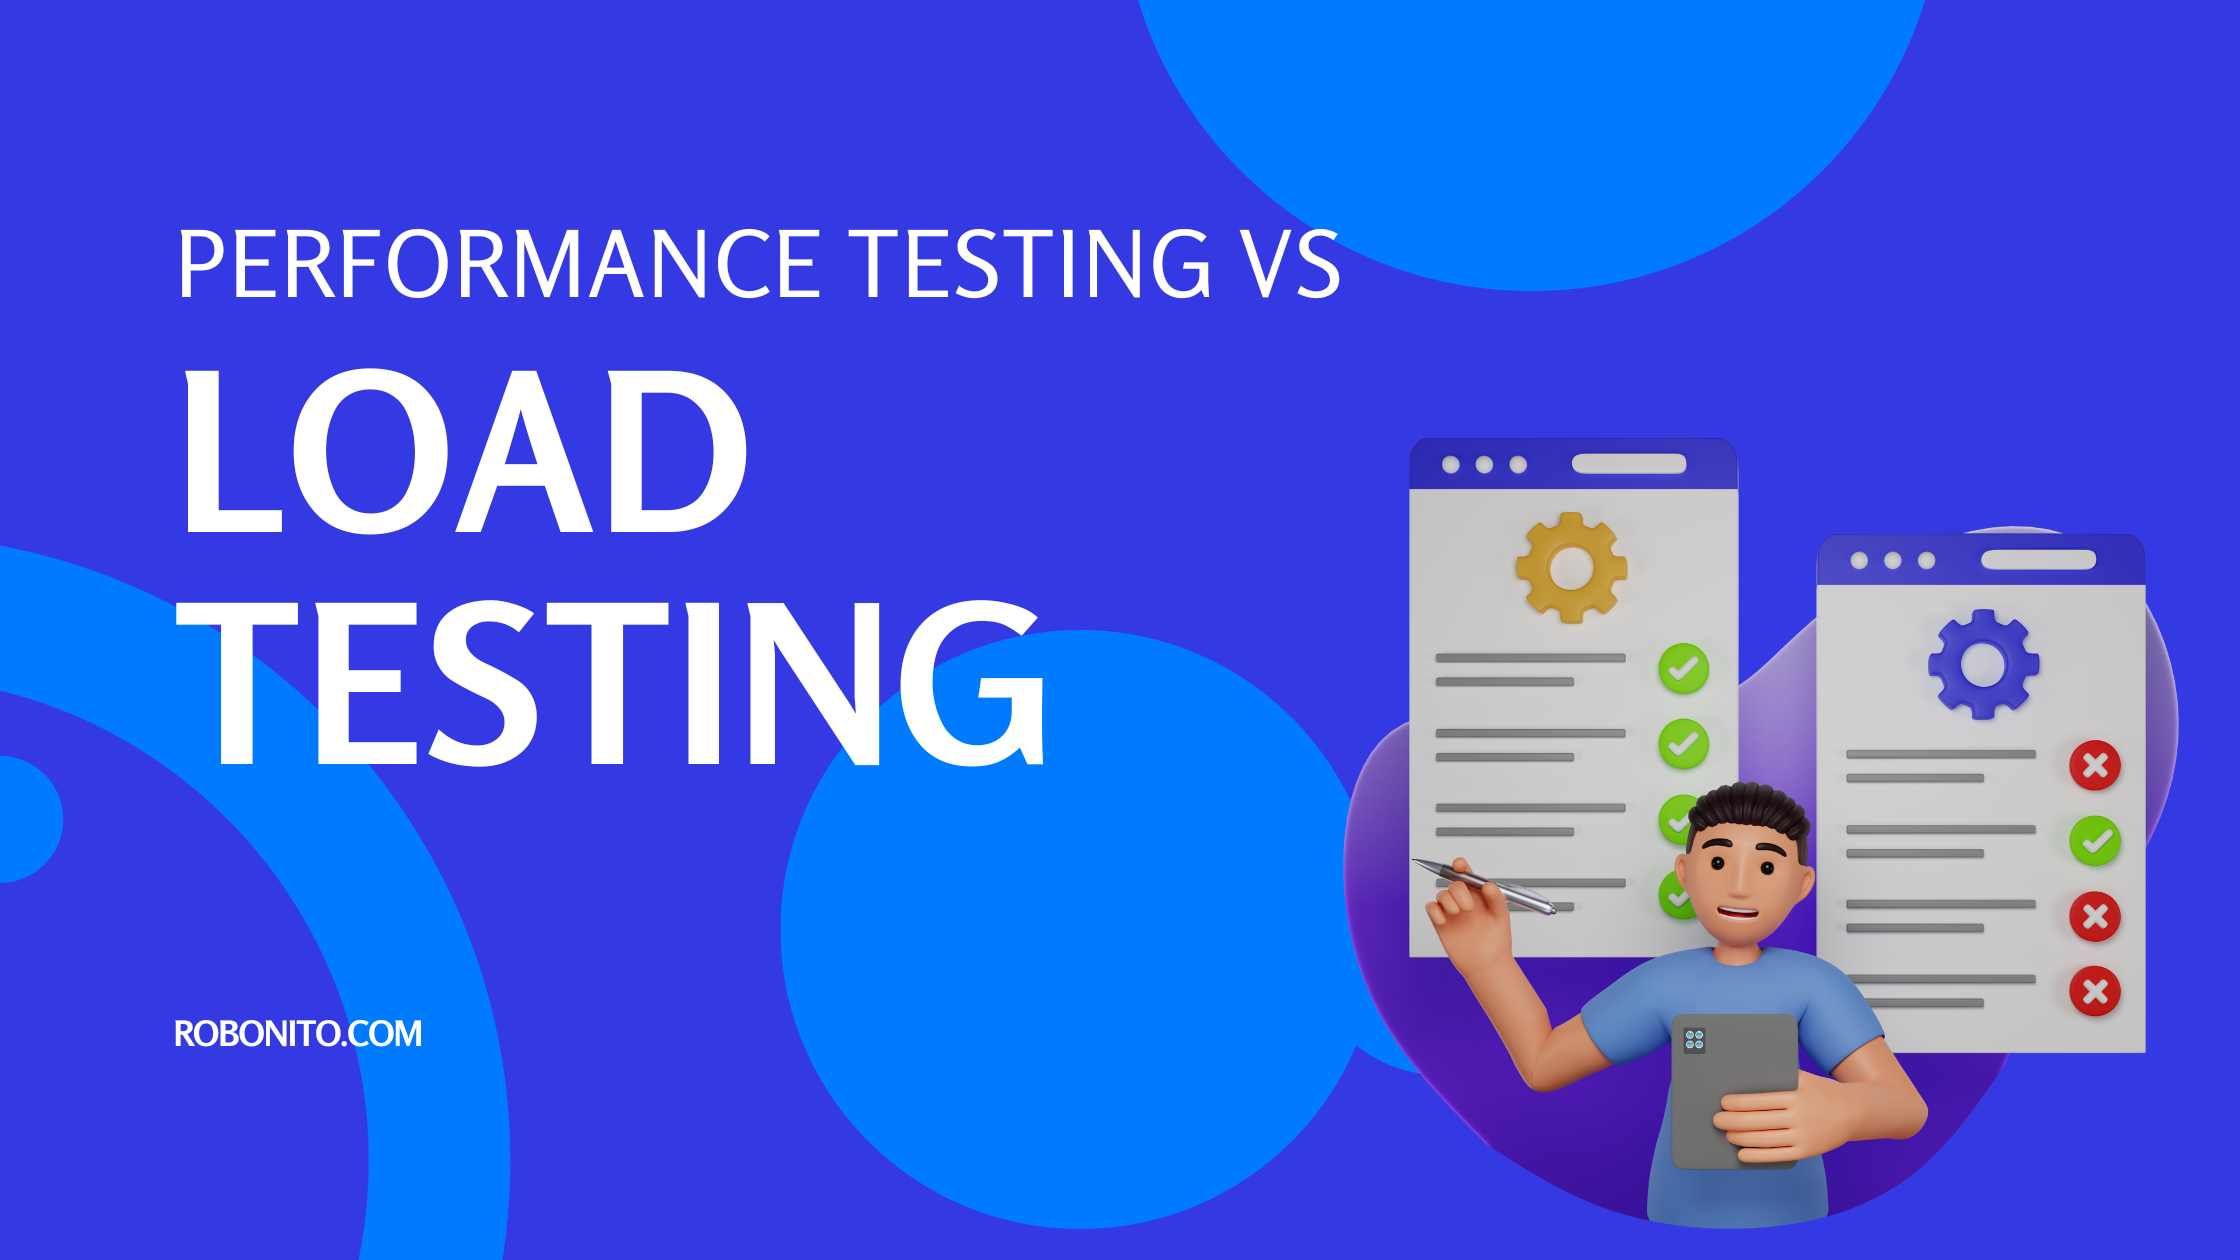 Performance Testing vs Load Testing